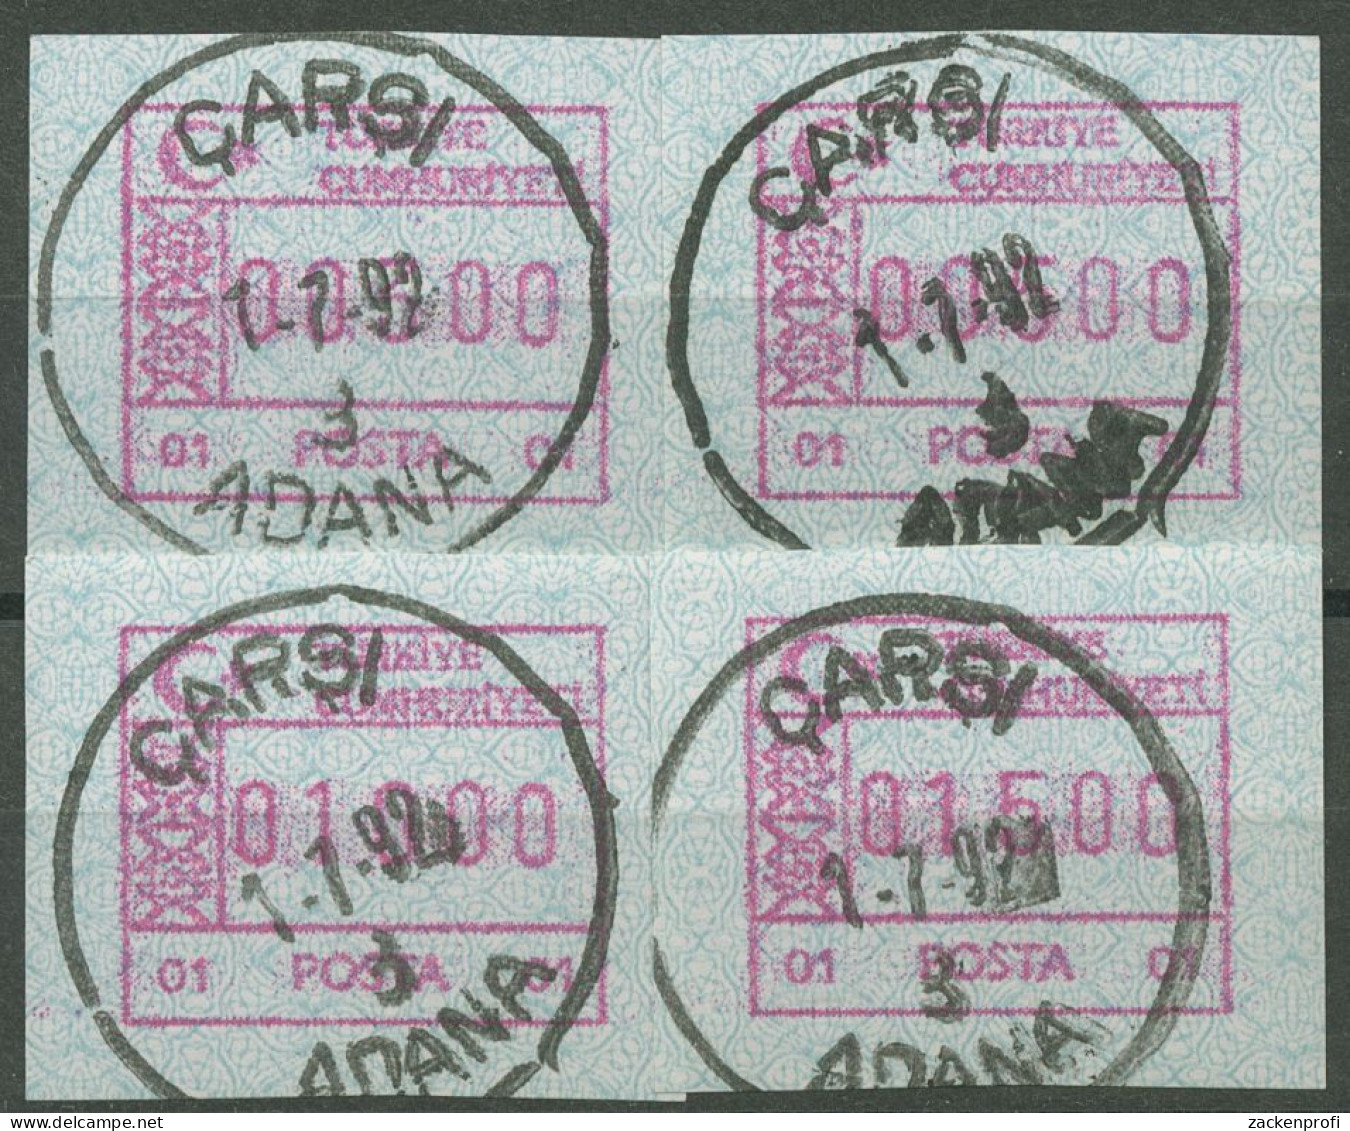 Türkei ATM 1992 Ornamente Automat 01 01, Satz 4 Werte ATM 2.1 S1 Gestempelt - Automaten